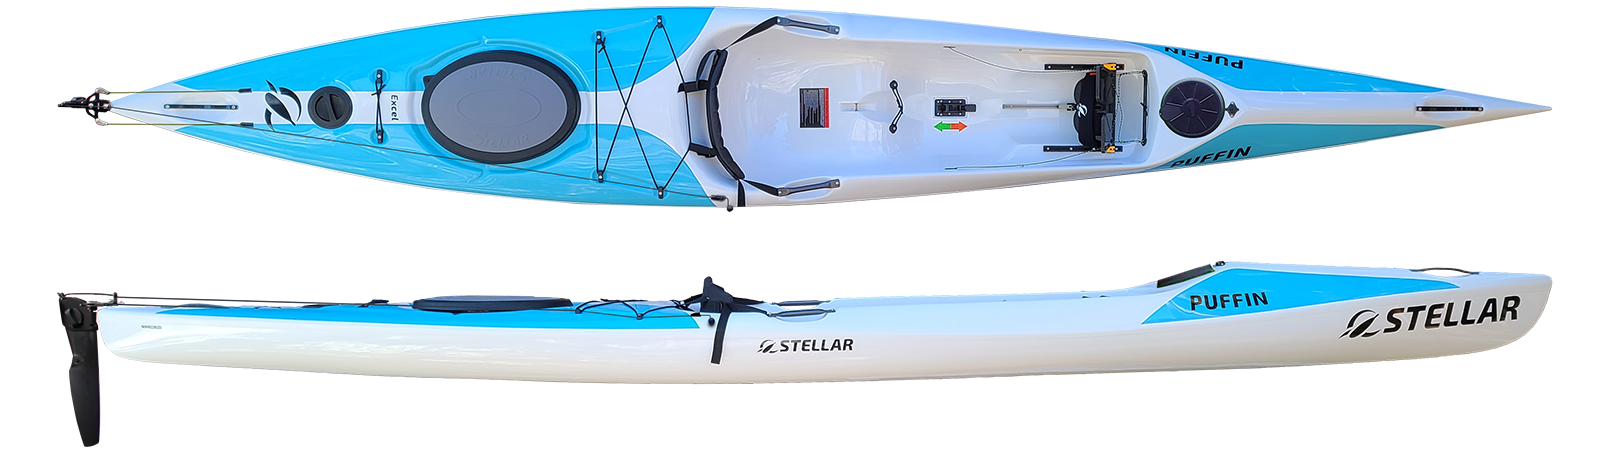 Puffin (S14S G2) - Stellar Kayaks USA - Innovative Performance